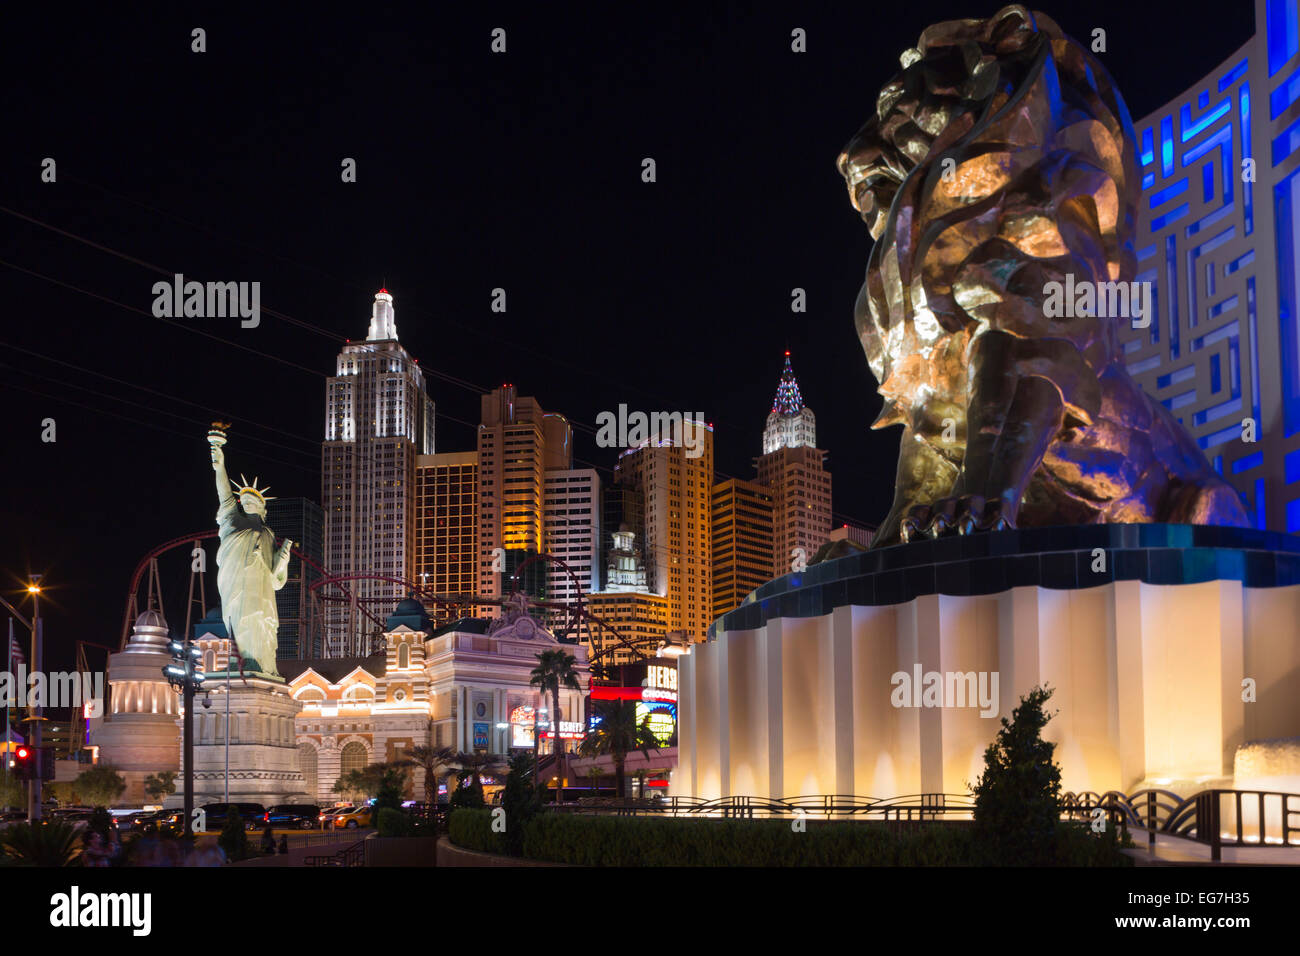 LION MGM GRAND NEW YORK NEW YORK HOTEL CASINOS THE STRIP LAS VEGAS NEVADA USA Stock Photo